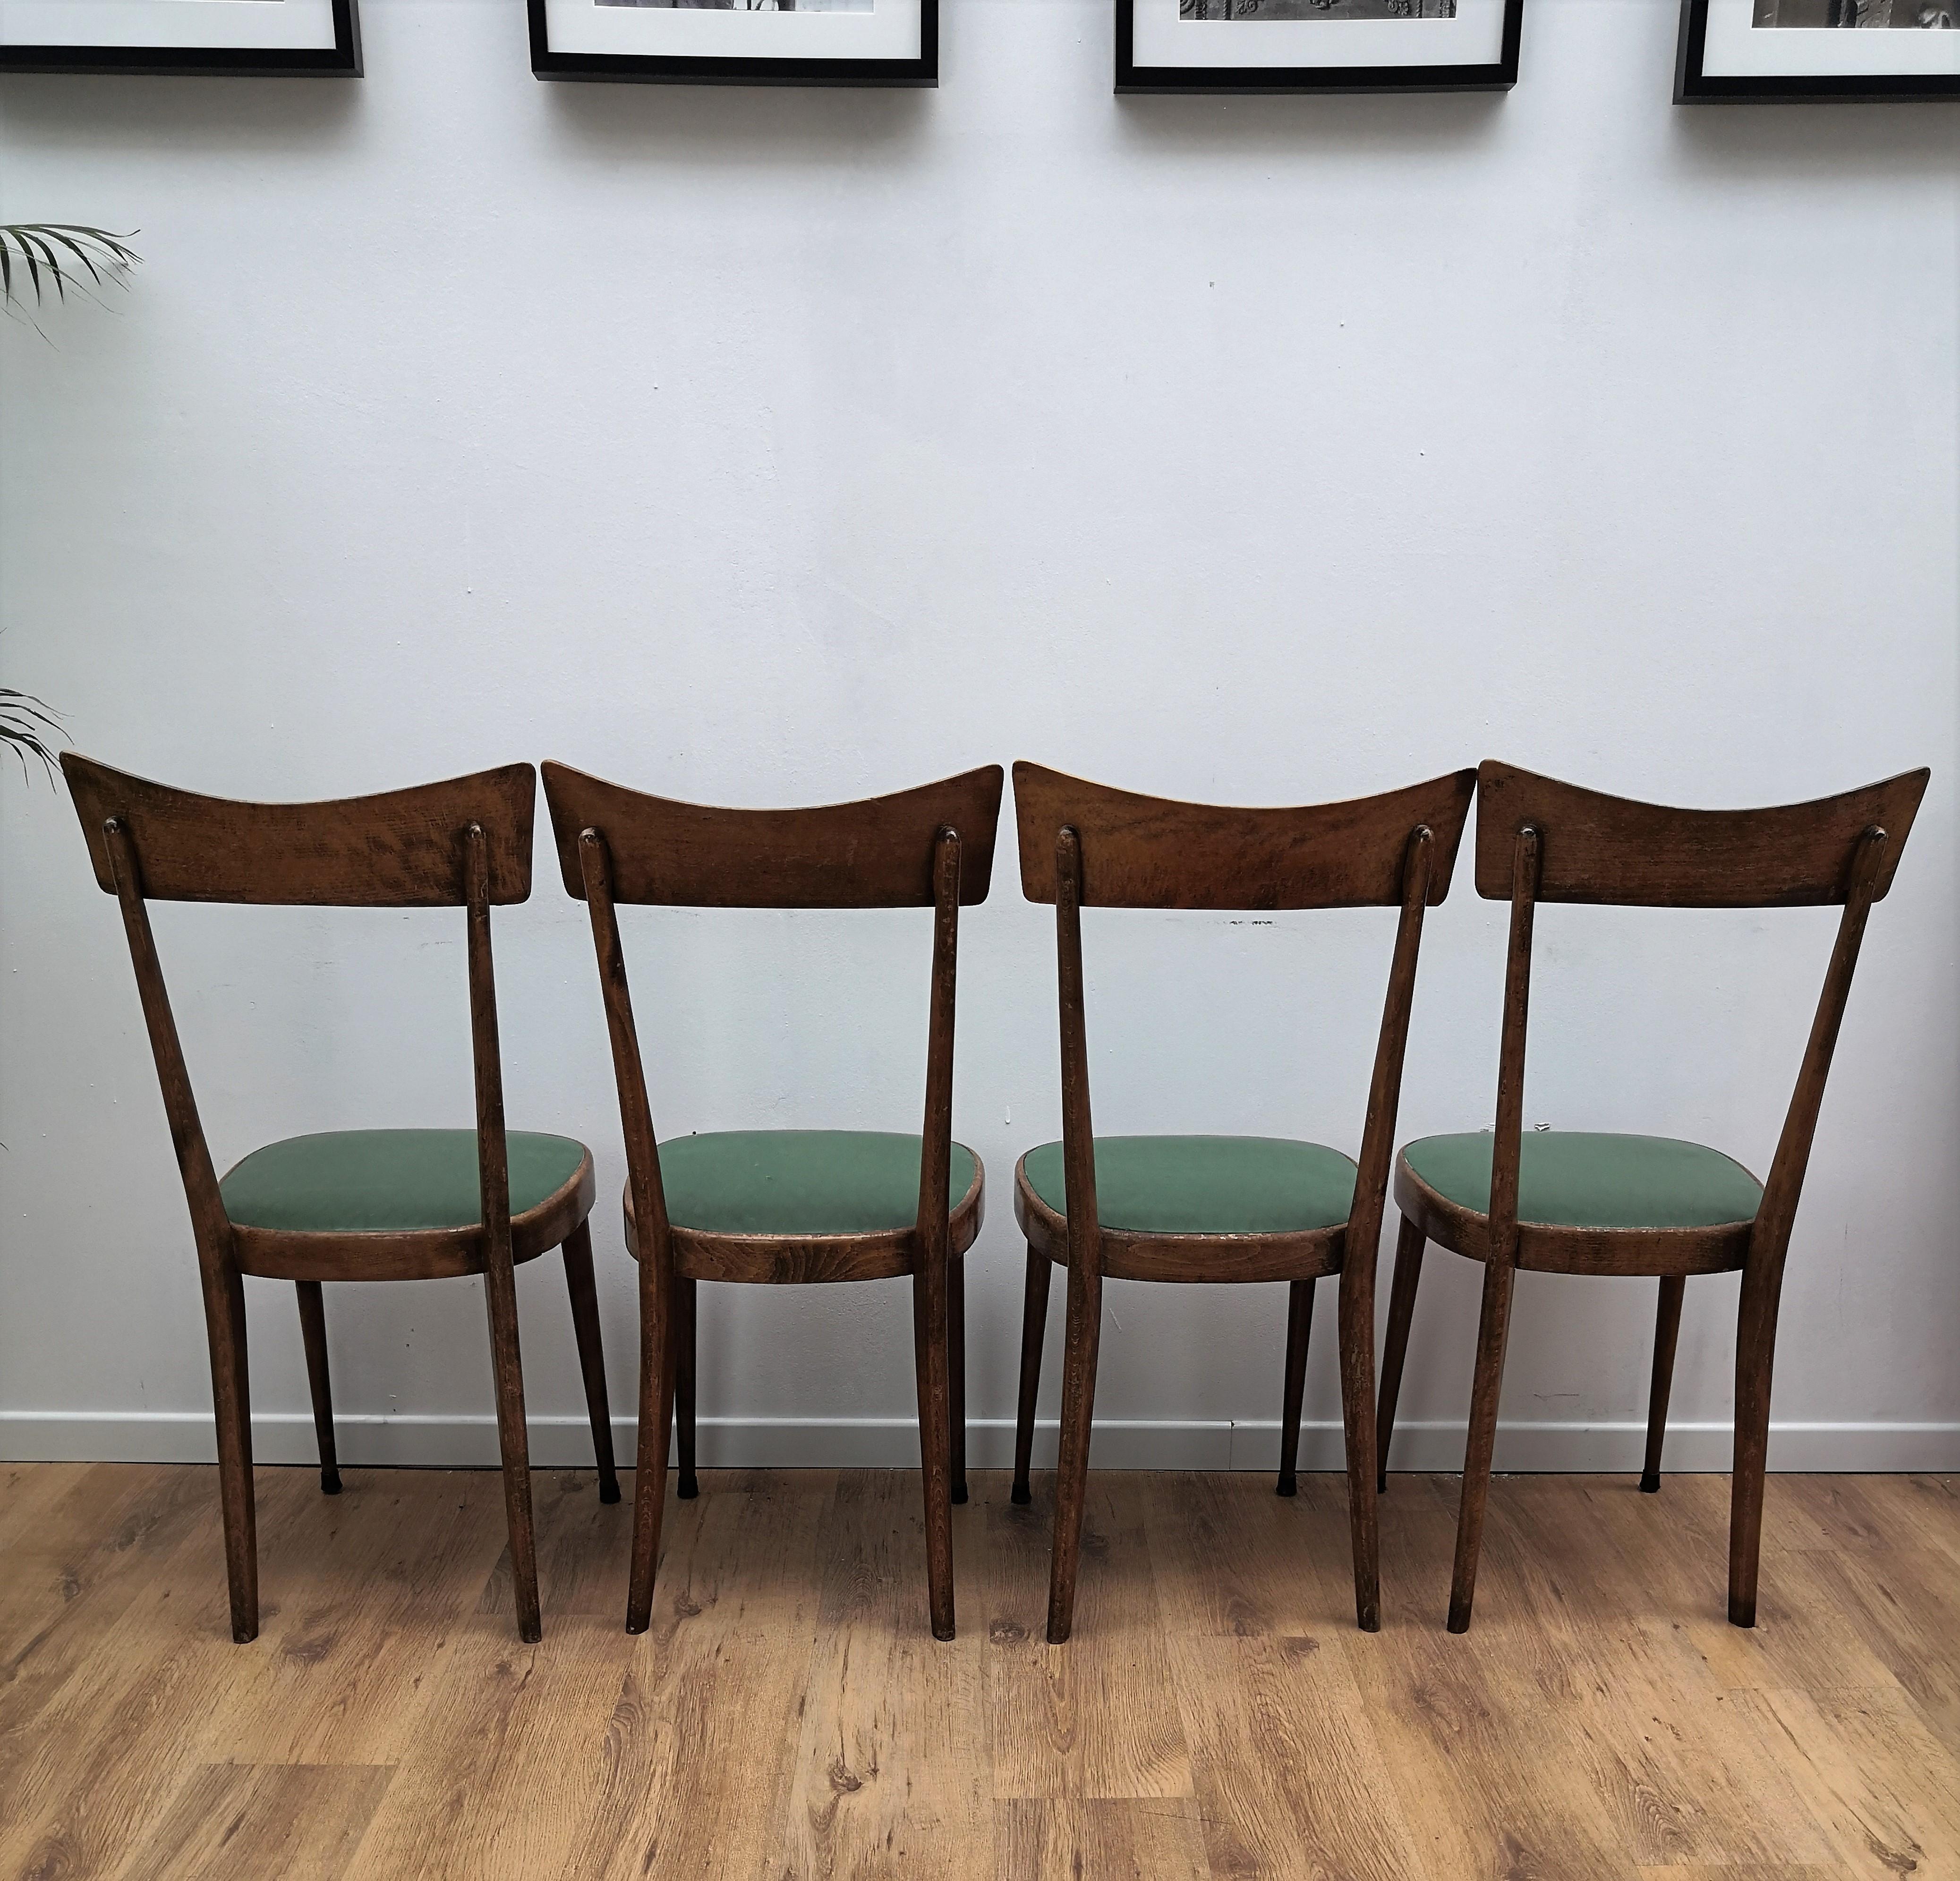 20th Century Set of Four 1950s Italian Mid-Century Modern Dining Room Chairs